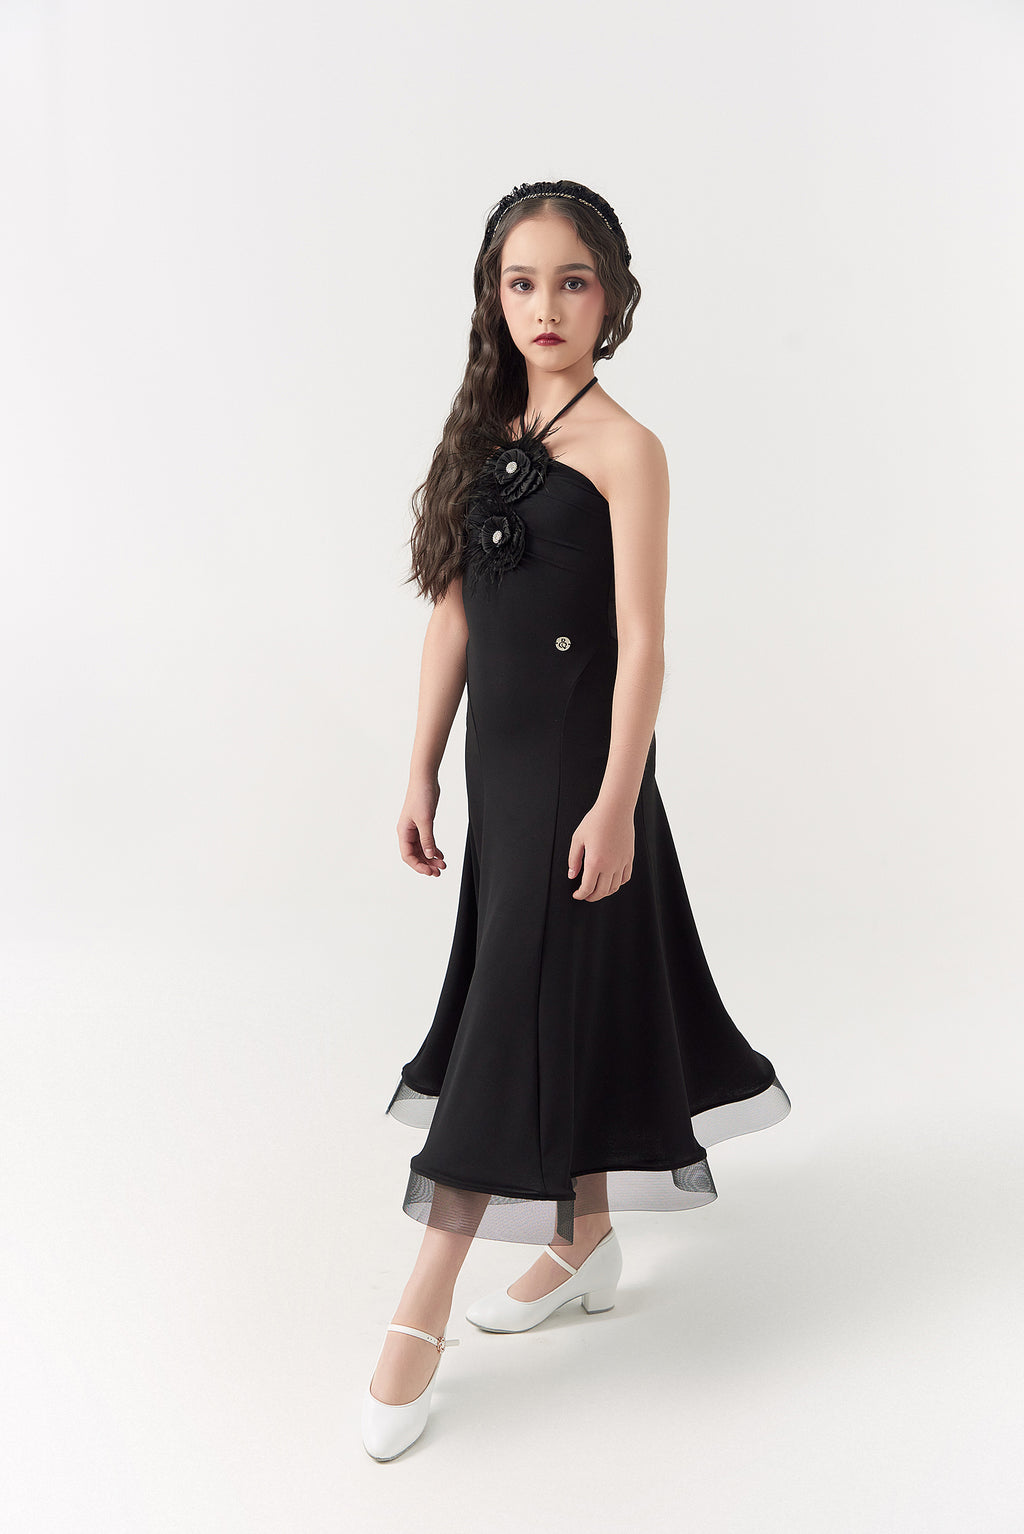 DQ-2306 Kid High-End Customized Floral Charm Halter Ruffle Dress